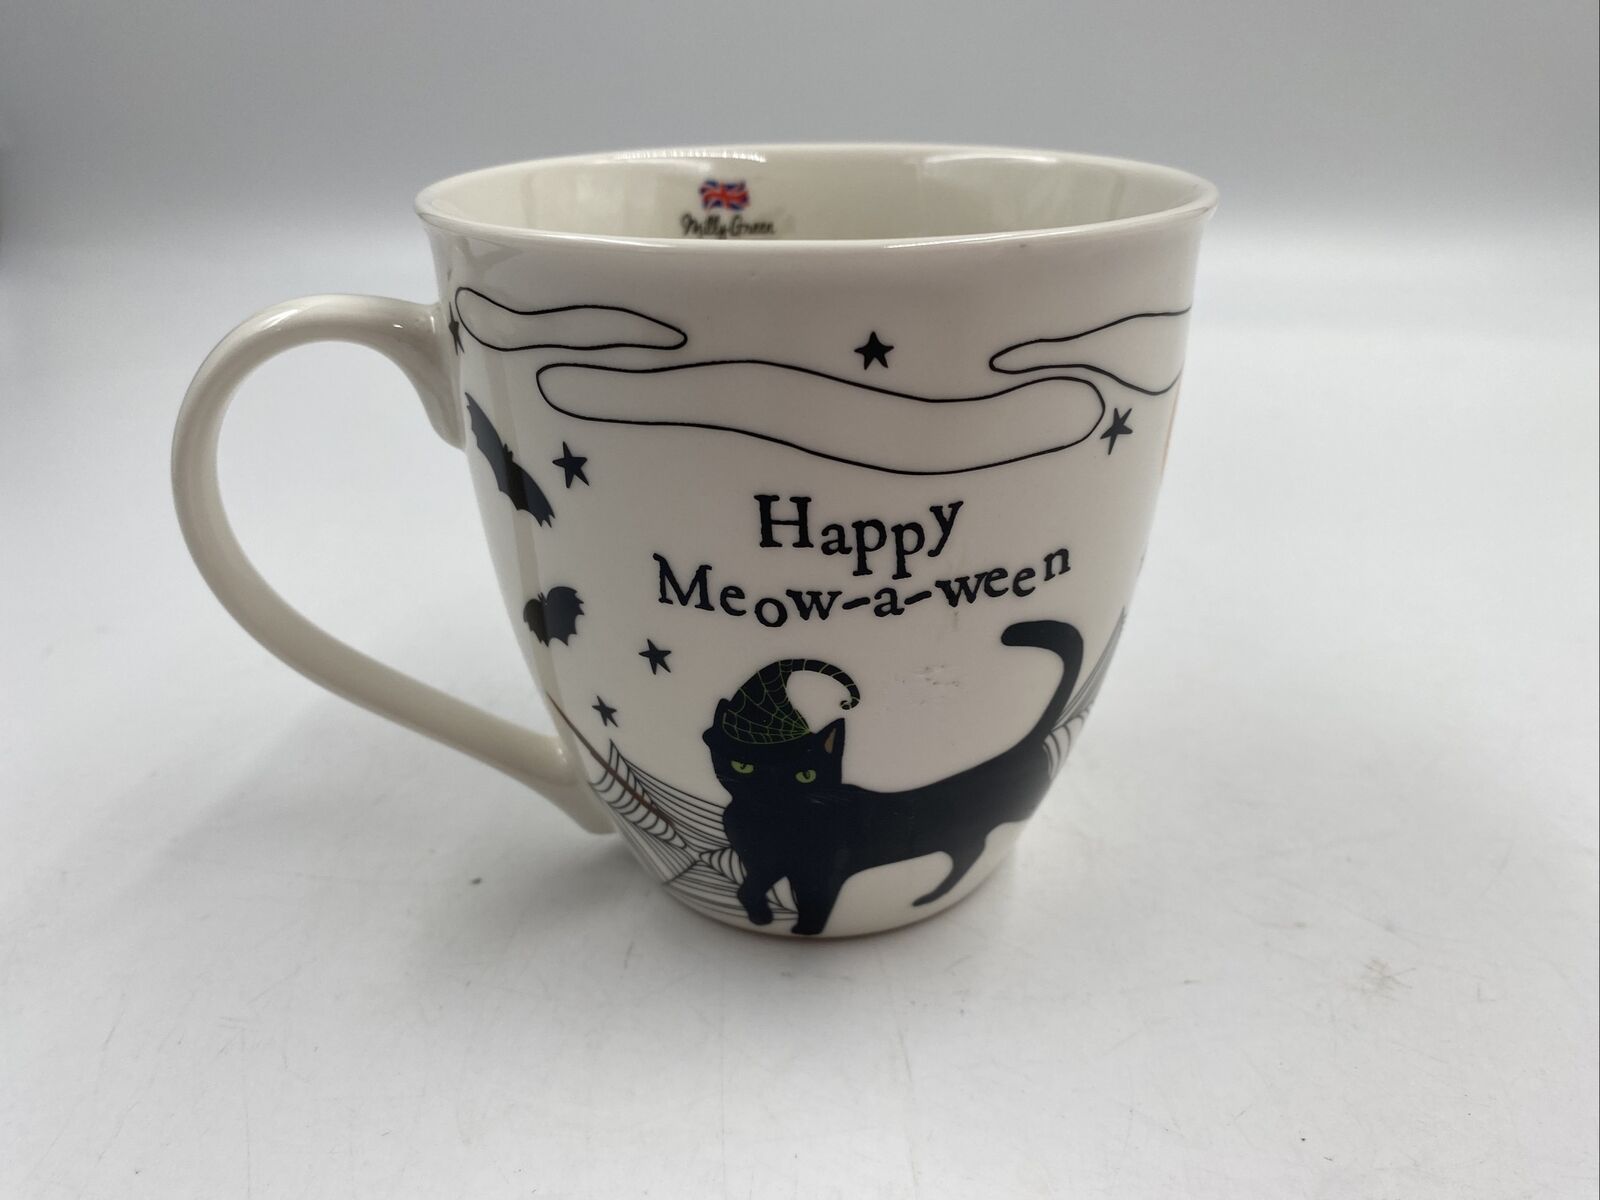 Milly Green Porcelain 16oz Happy Meow-a-ween Coffee Mug BB02B14011